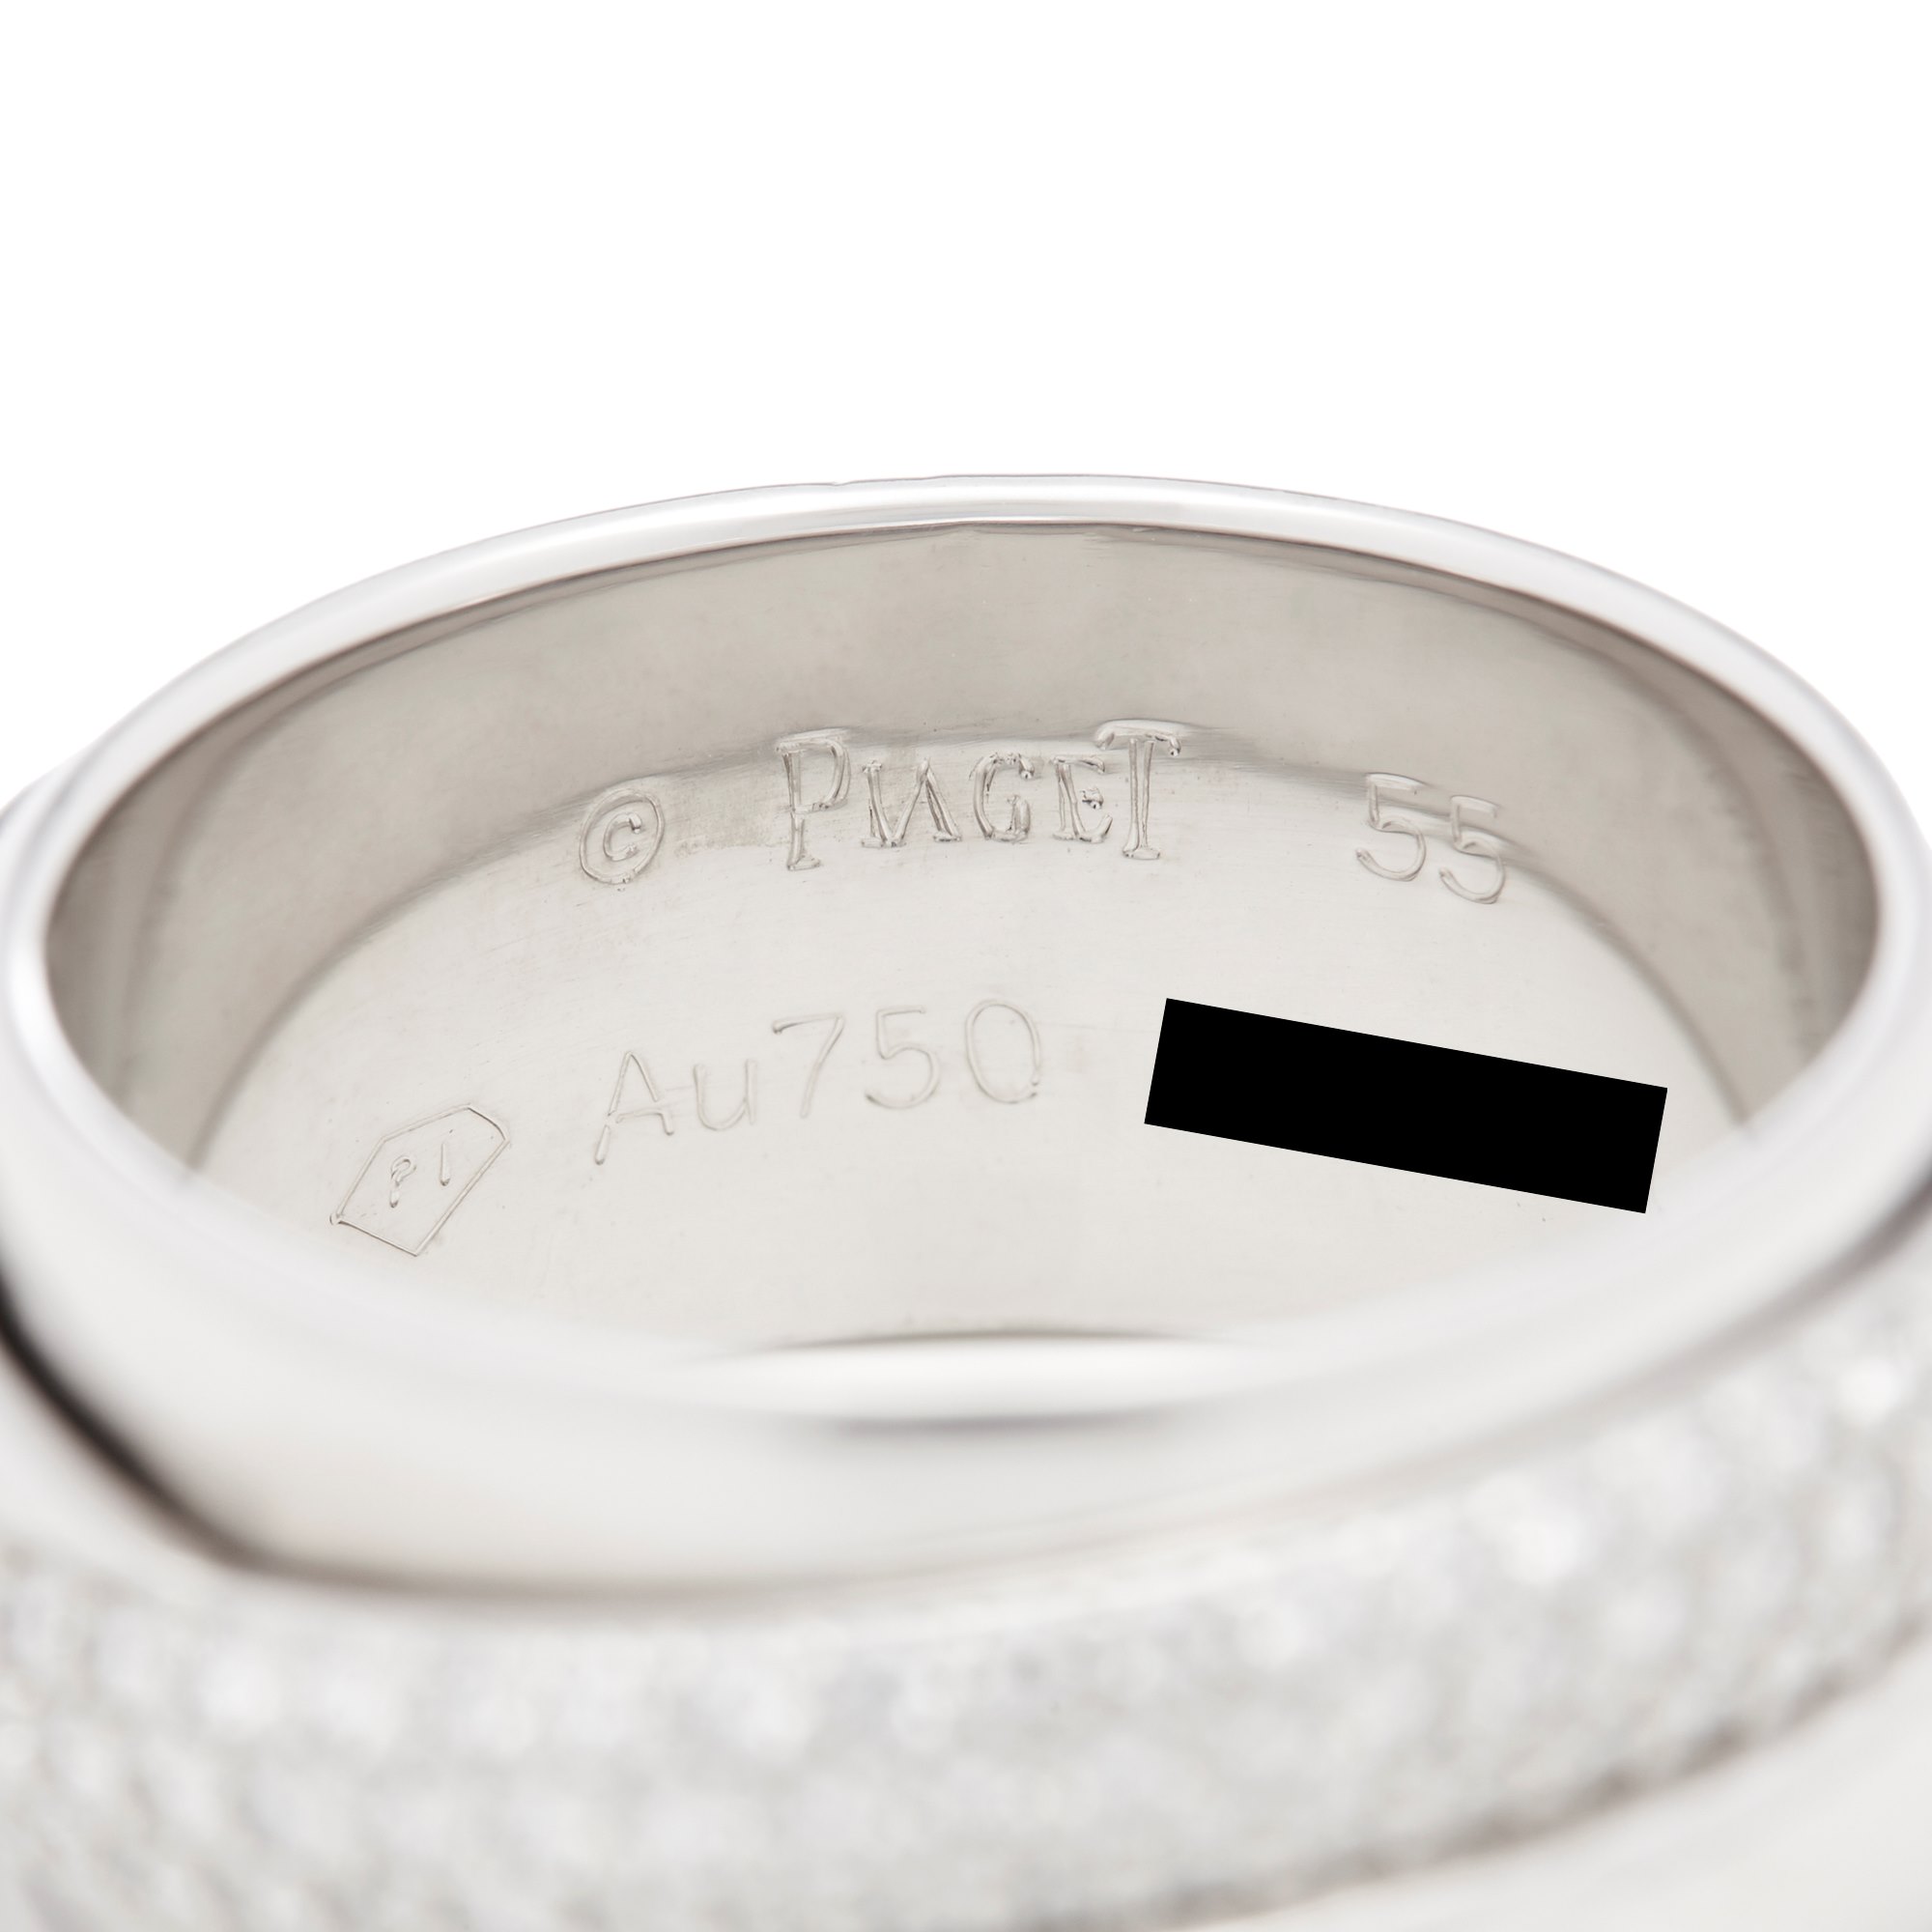 Piaget 18k White Gold Diamond Possession Ring